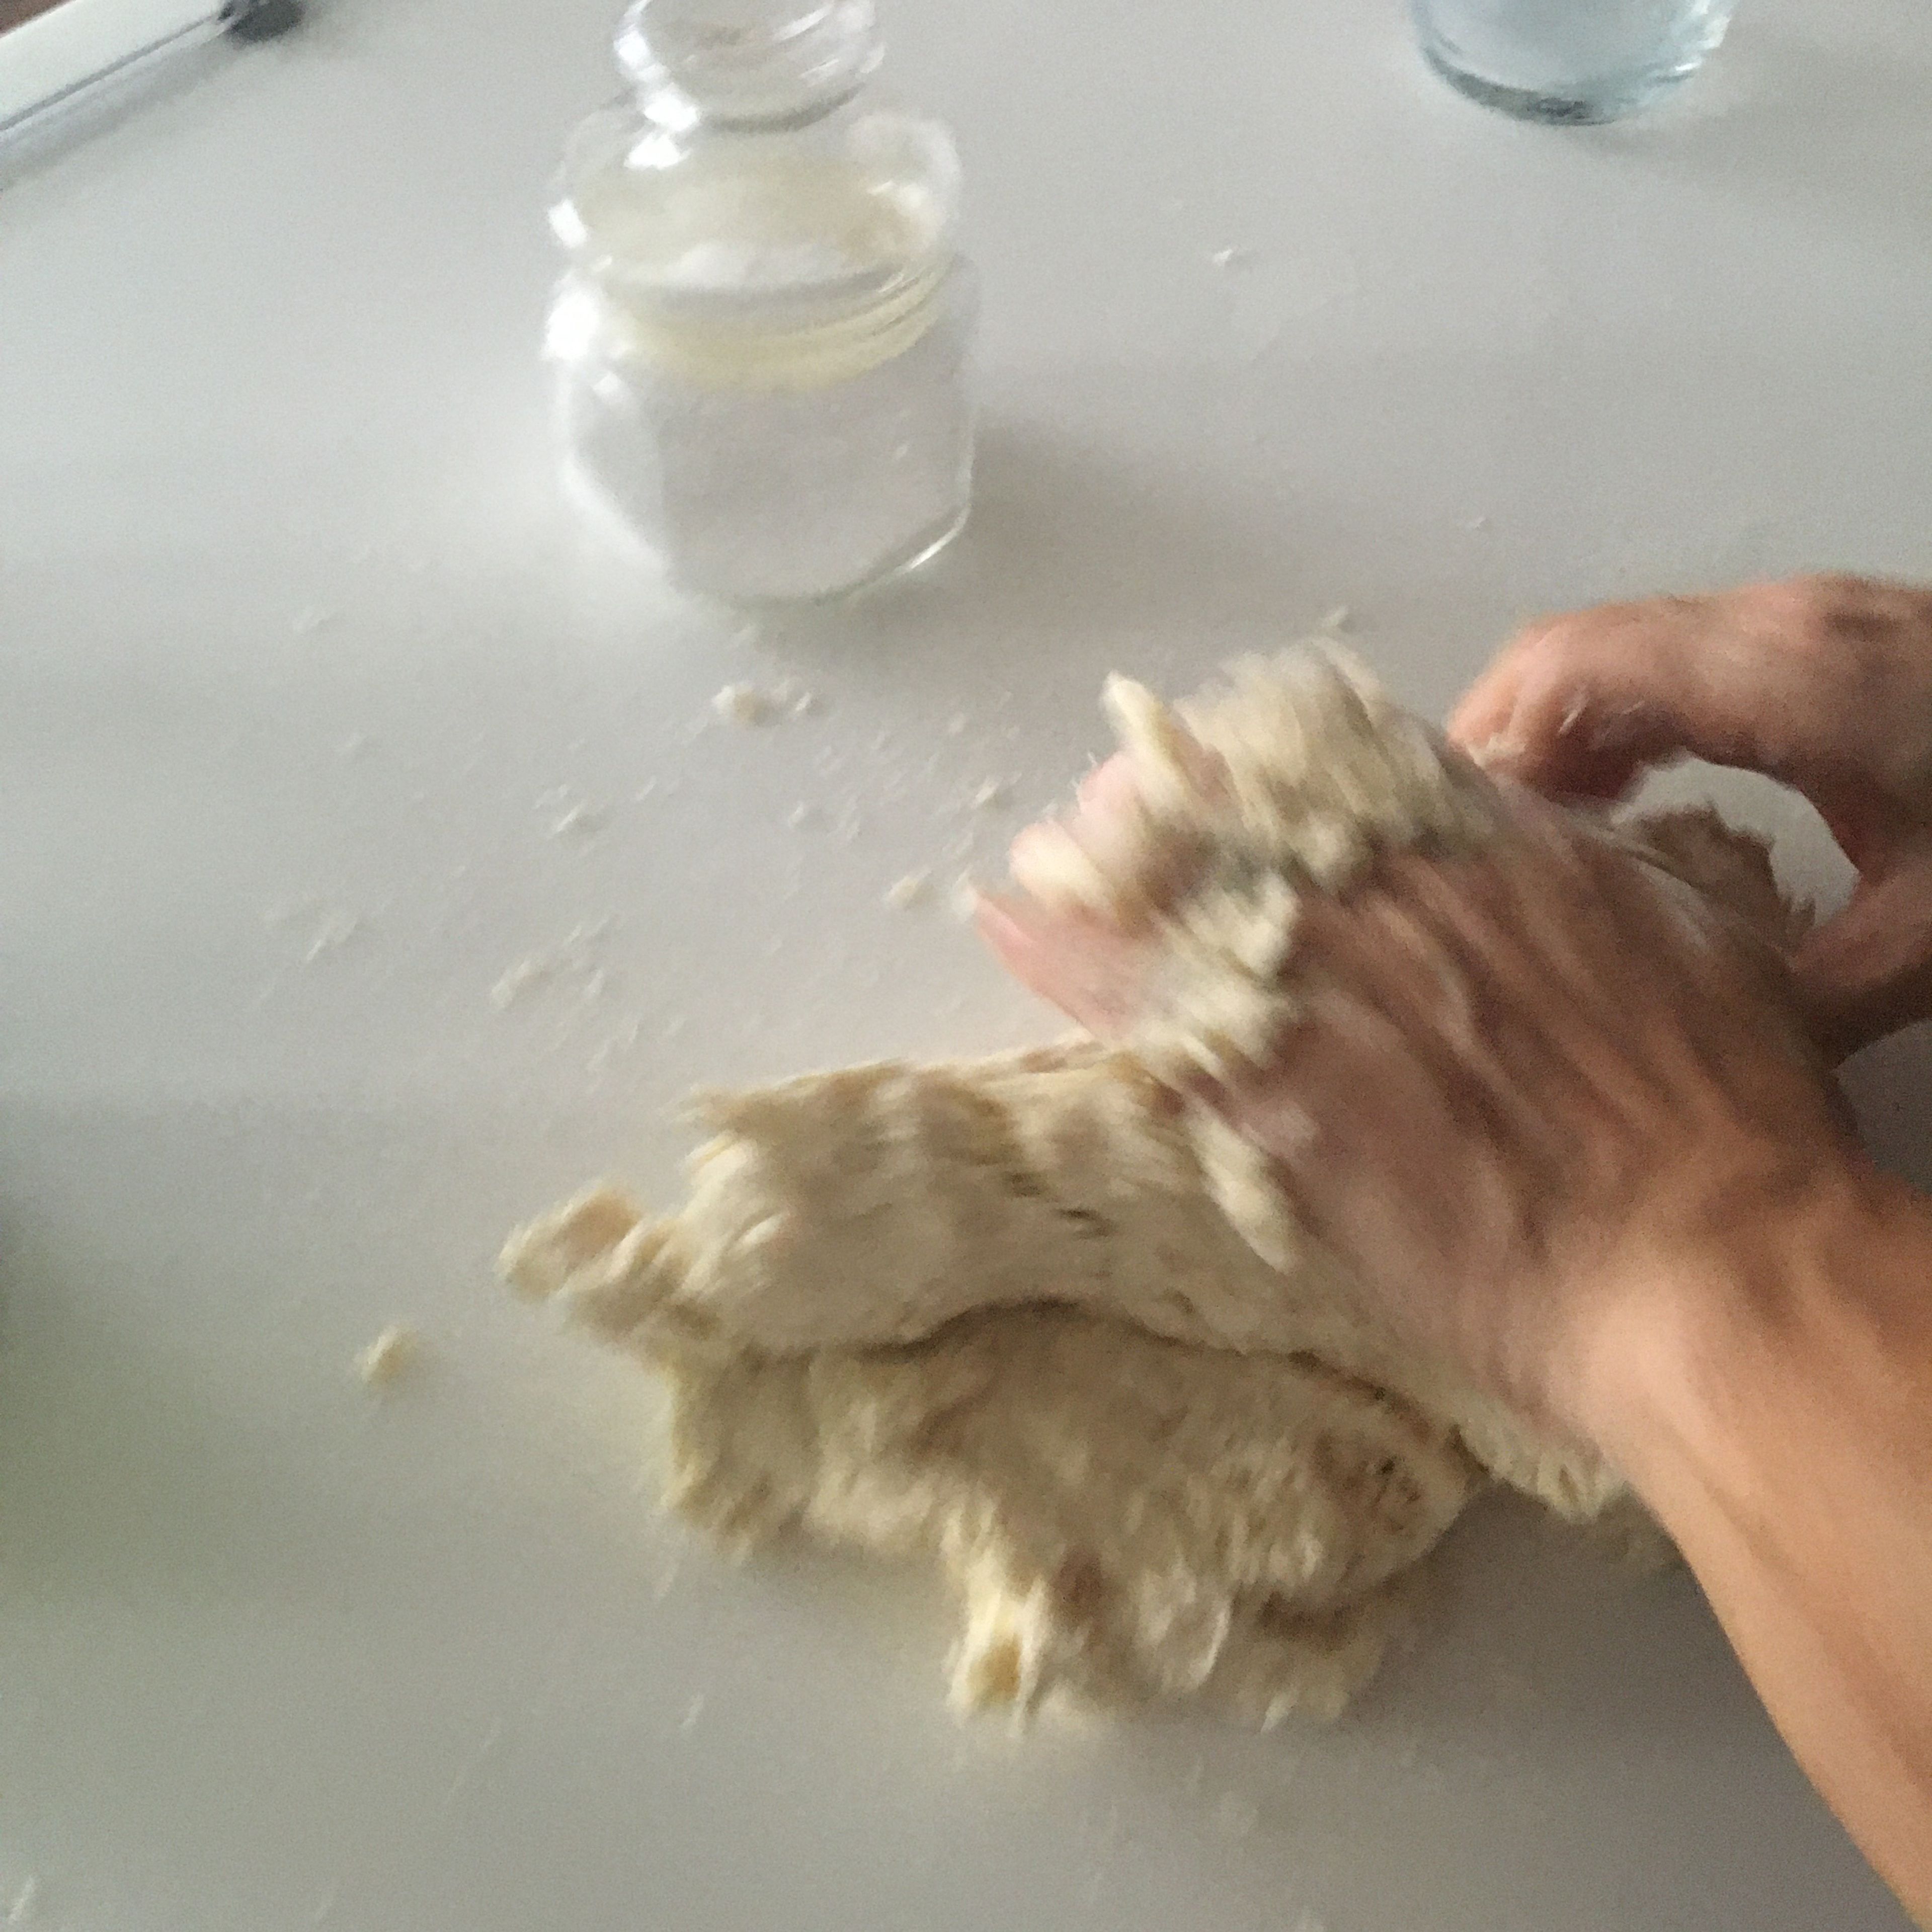 Start kneading the dough